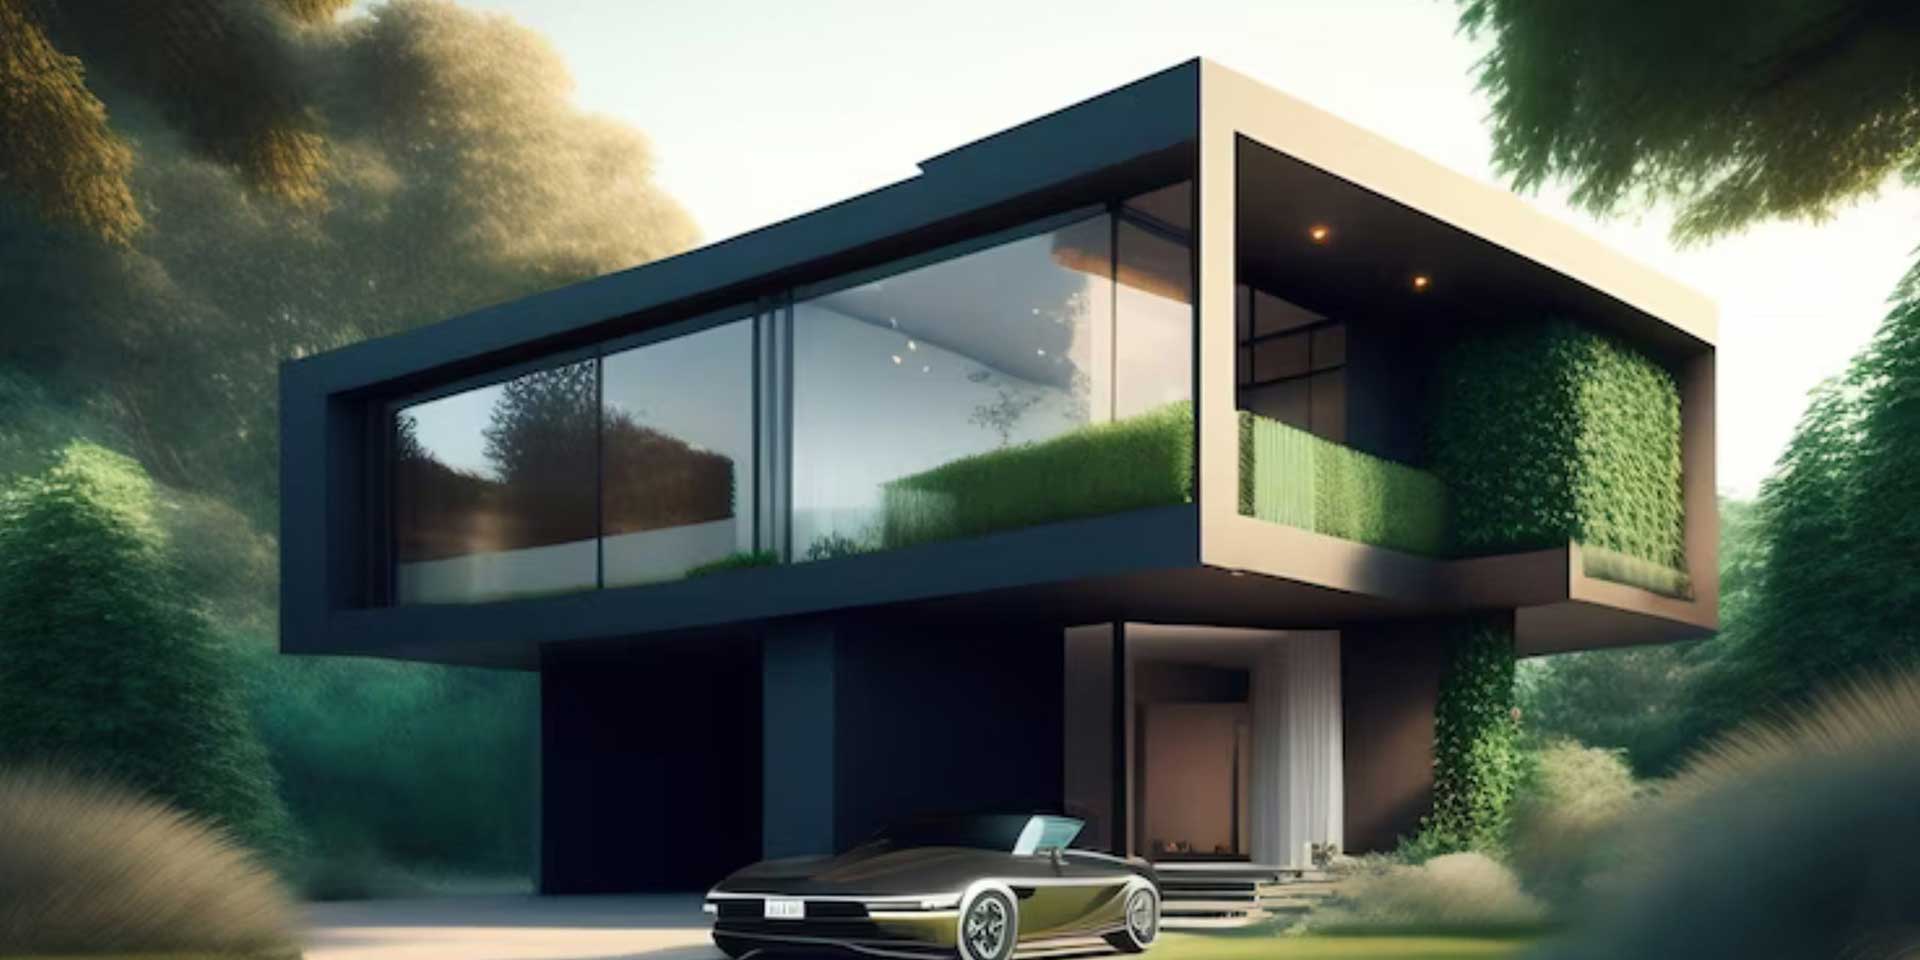 Sustainable luxury home design